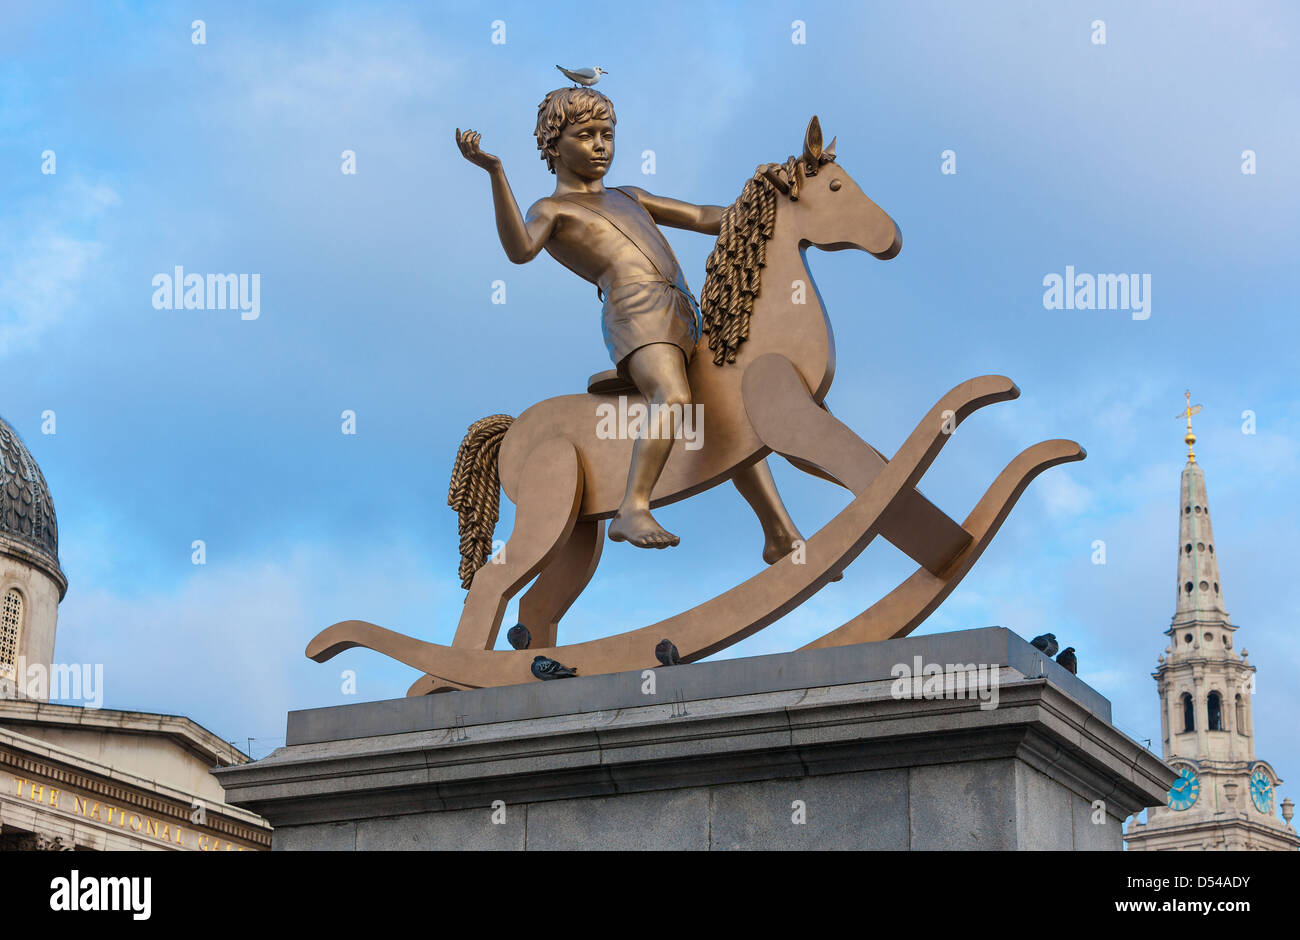 Boy on a Rocking Horse sculpture, fourth plinth, Trafalgar Square, London, England, UK Stock Photo